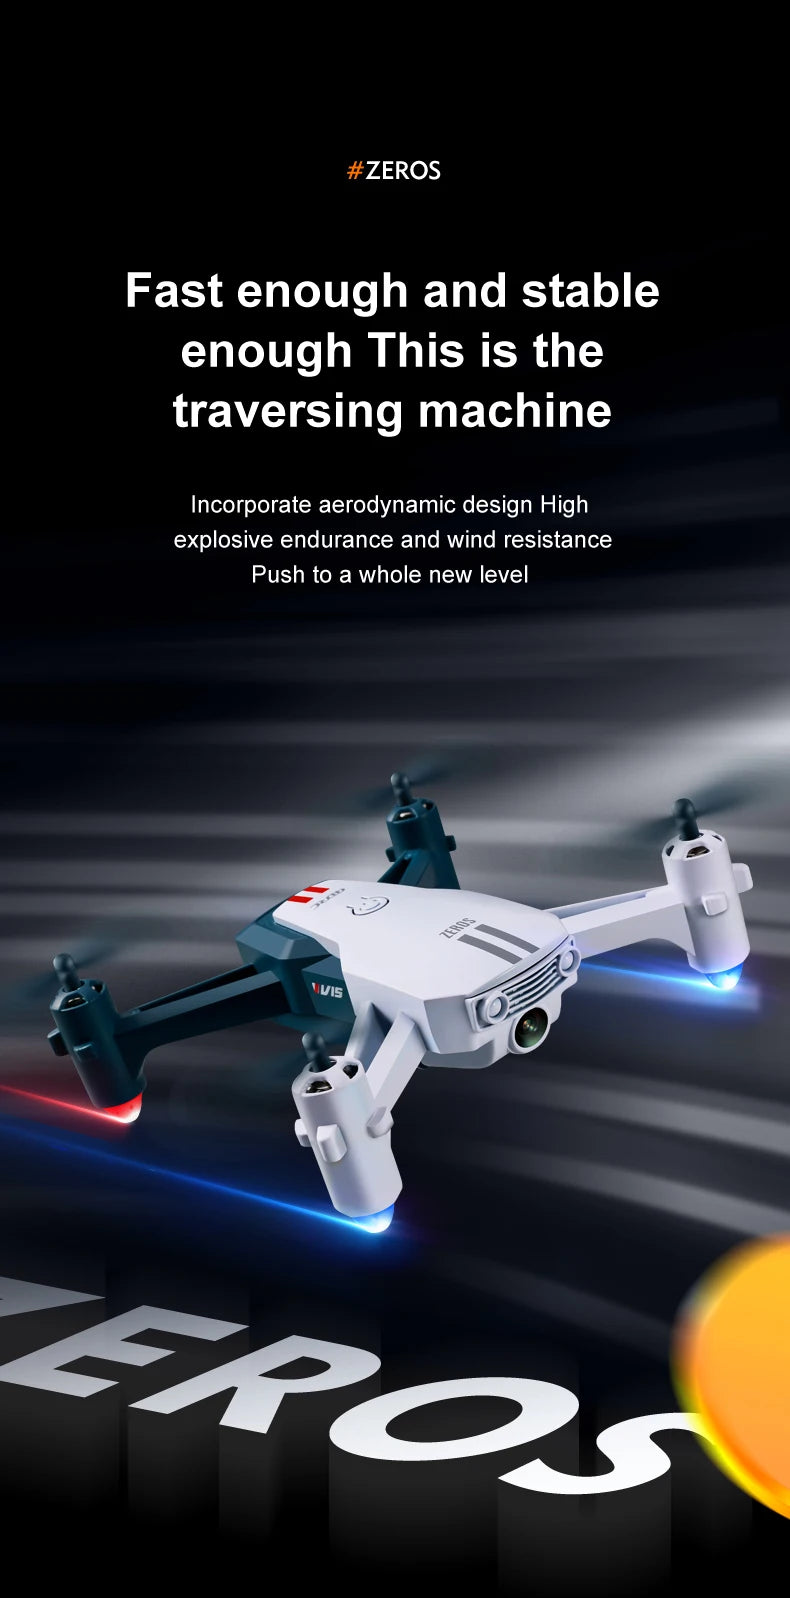 V15 Drone, the #zeros traversing machine incorporate aerodynamic design high explosive endurance